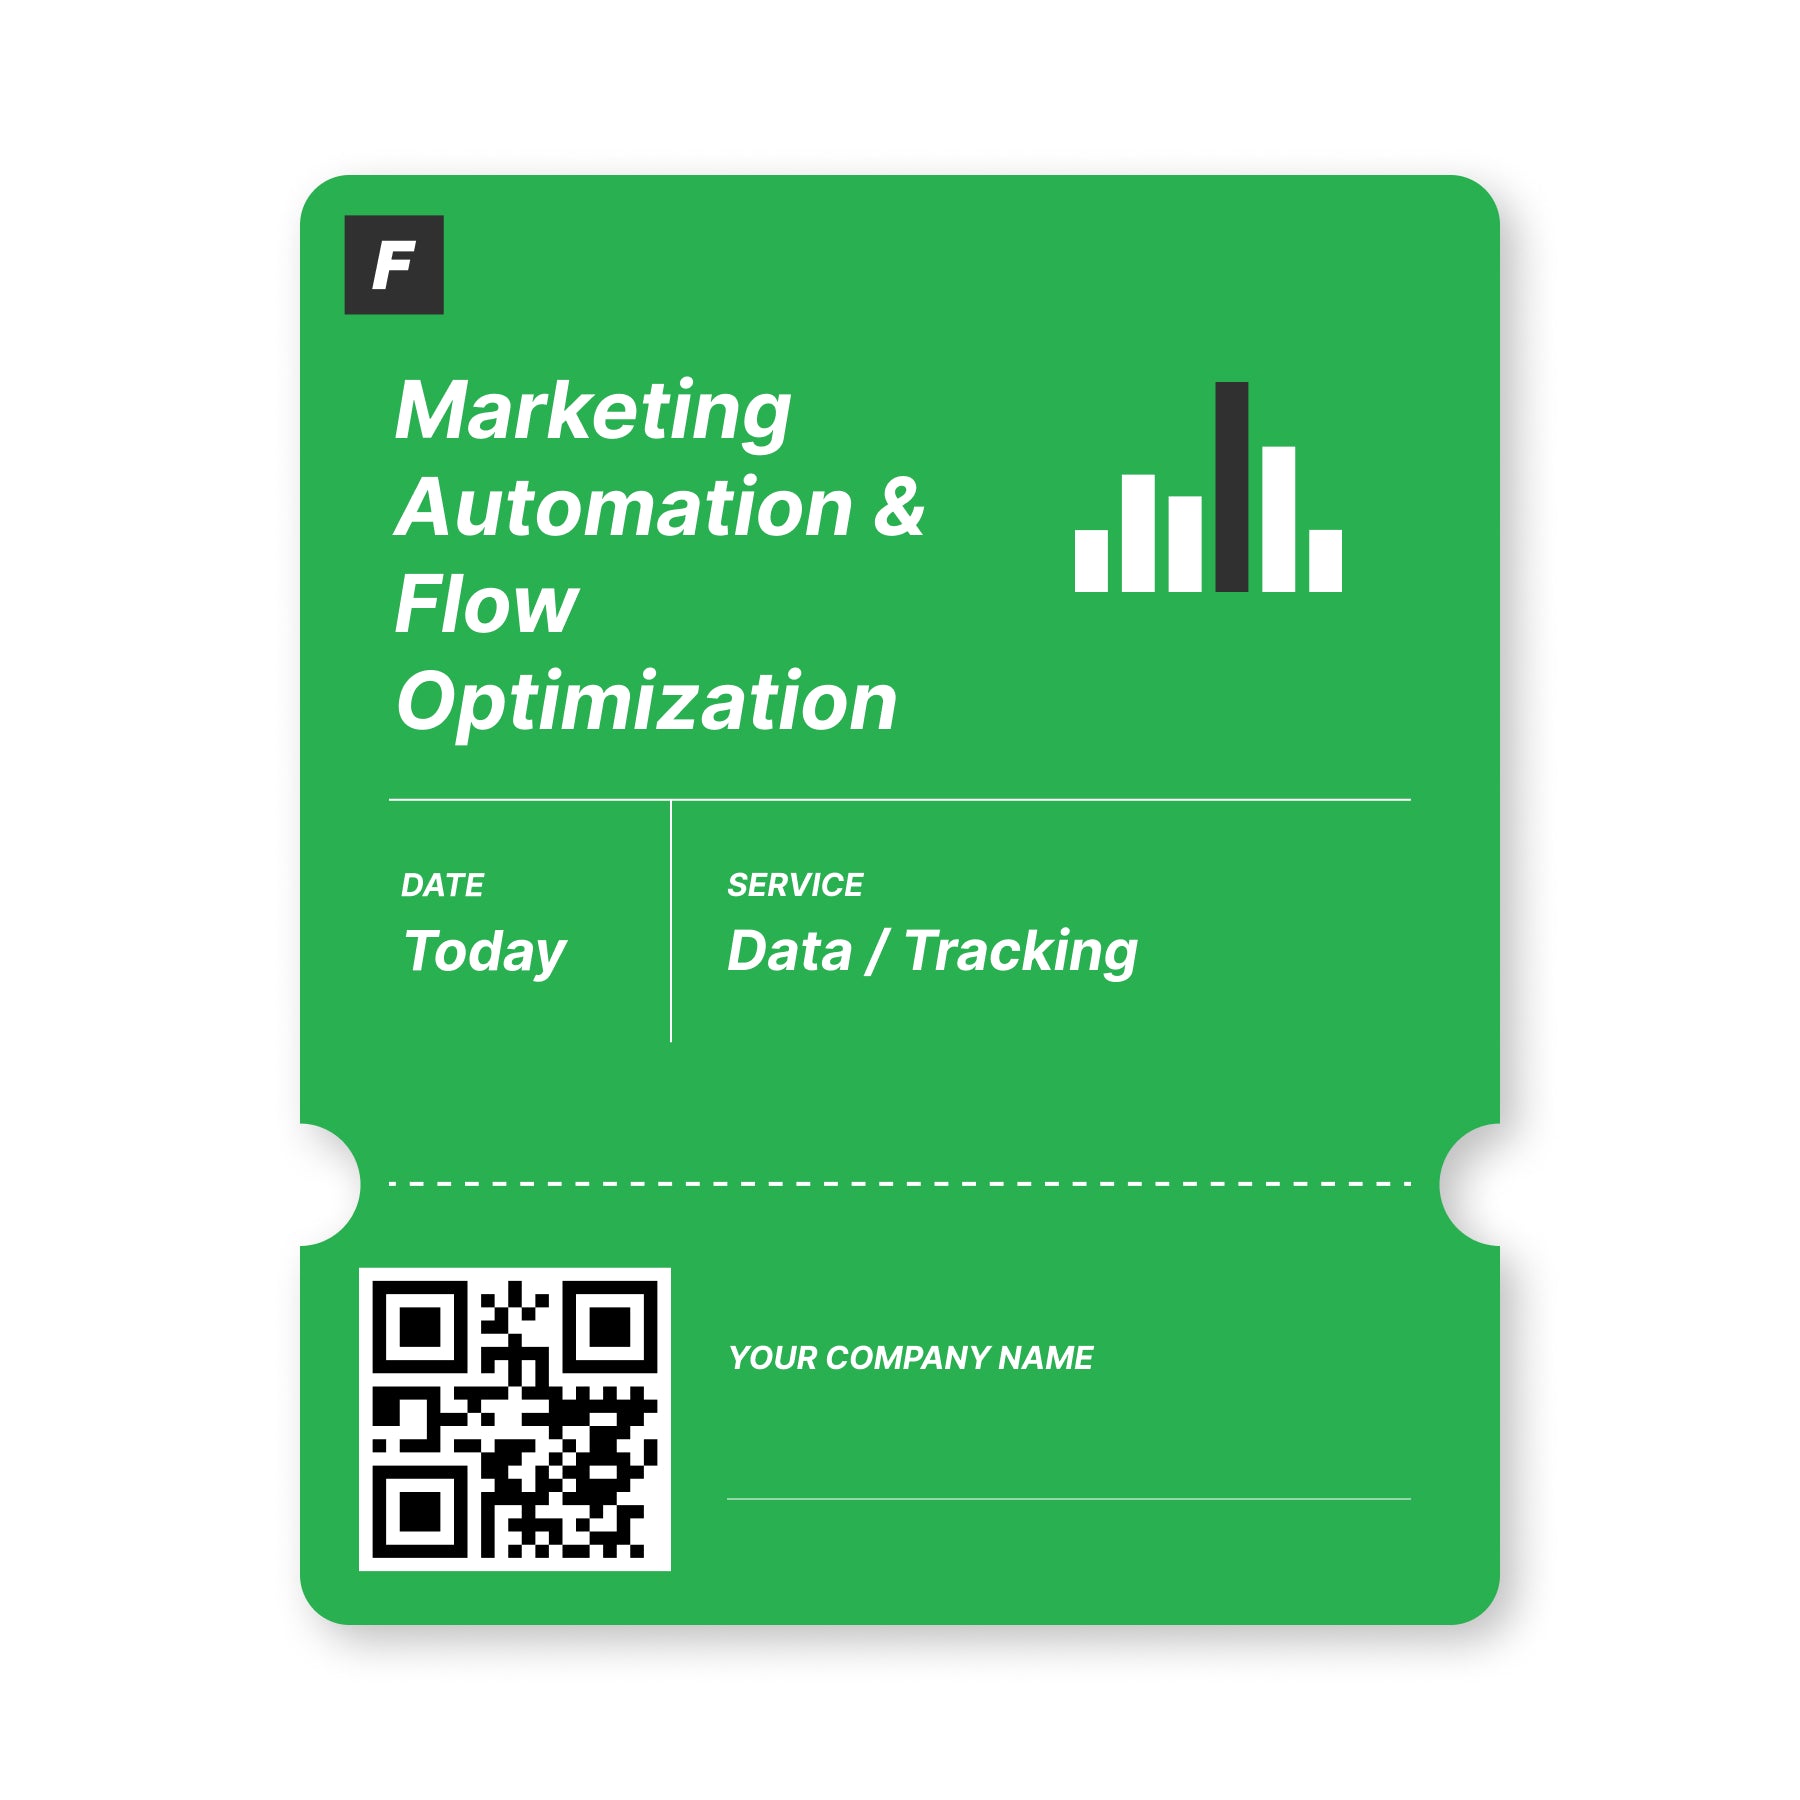 Marketing Automation & Flow Optimization